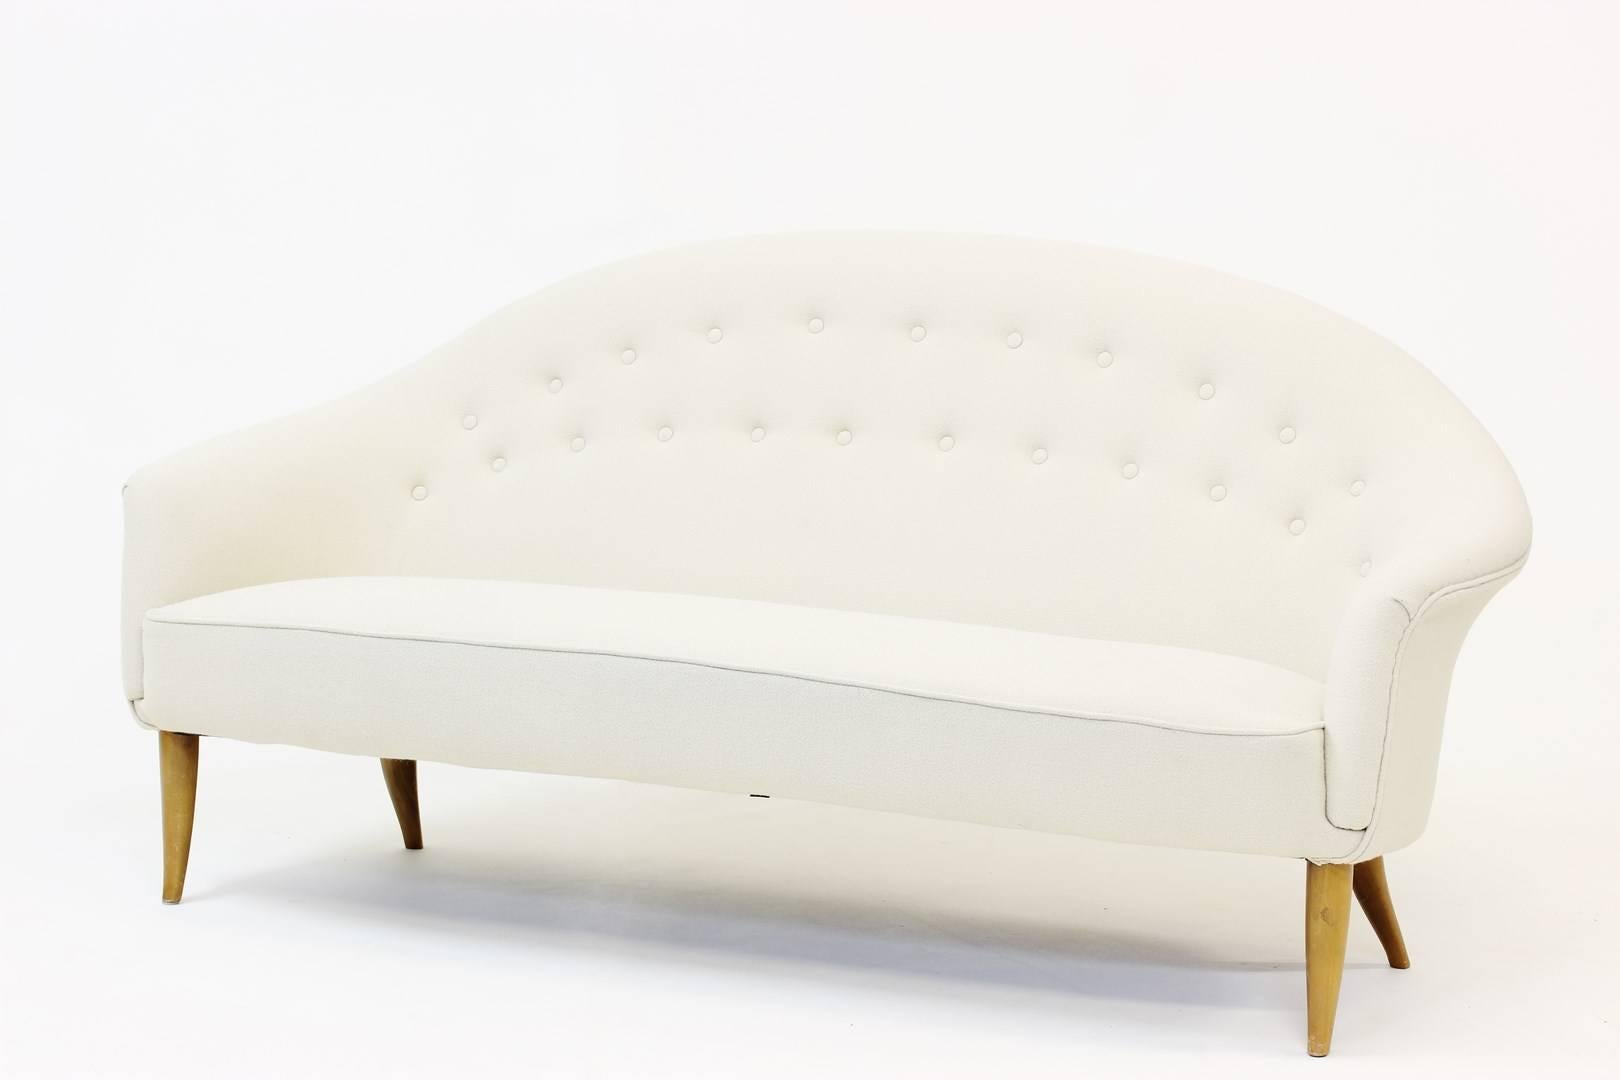 Elegant, feminine three-seat sofa from the “Paradis” series by Kerstin Hörlin-Holmquist for NK (Nordiska Kompaniet). Reupholstered with an off-white wool Hallingdal fabric.